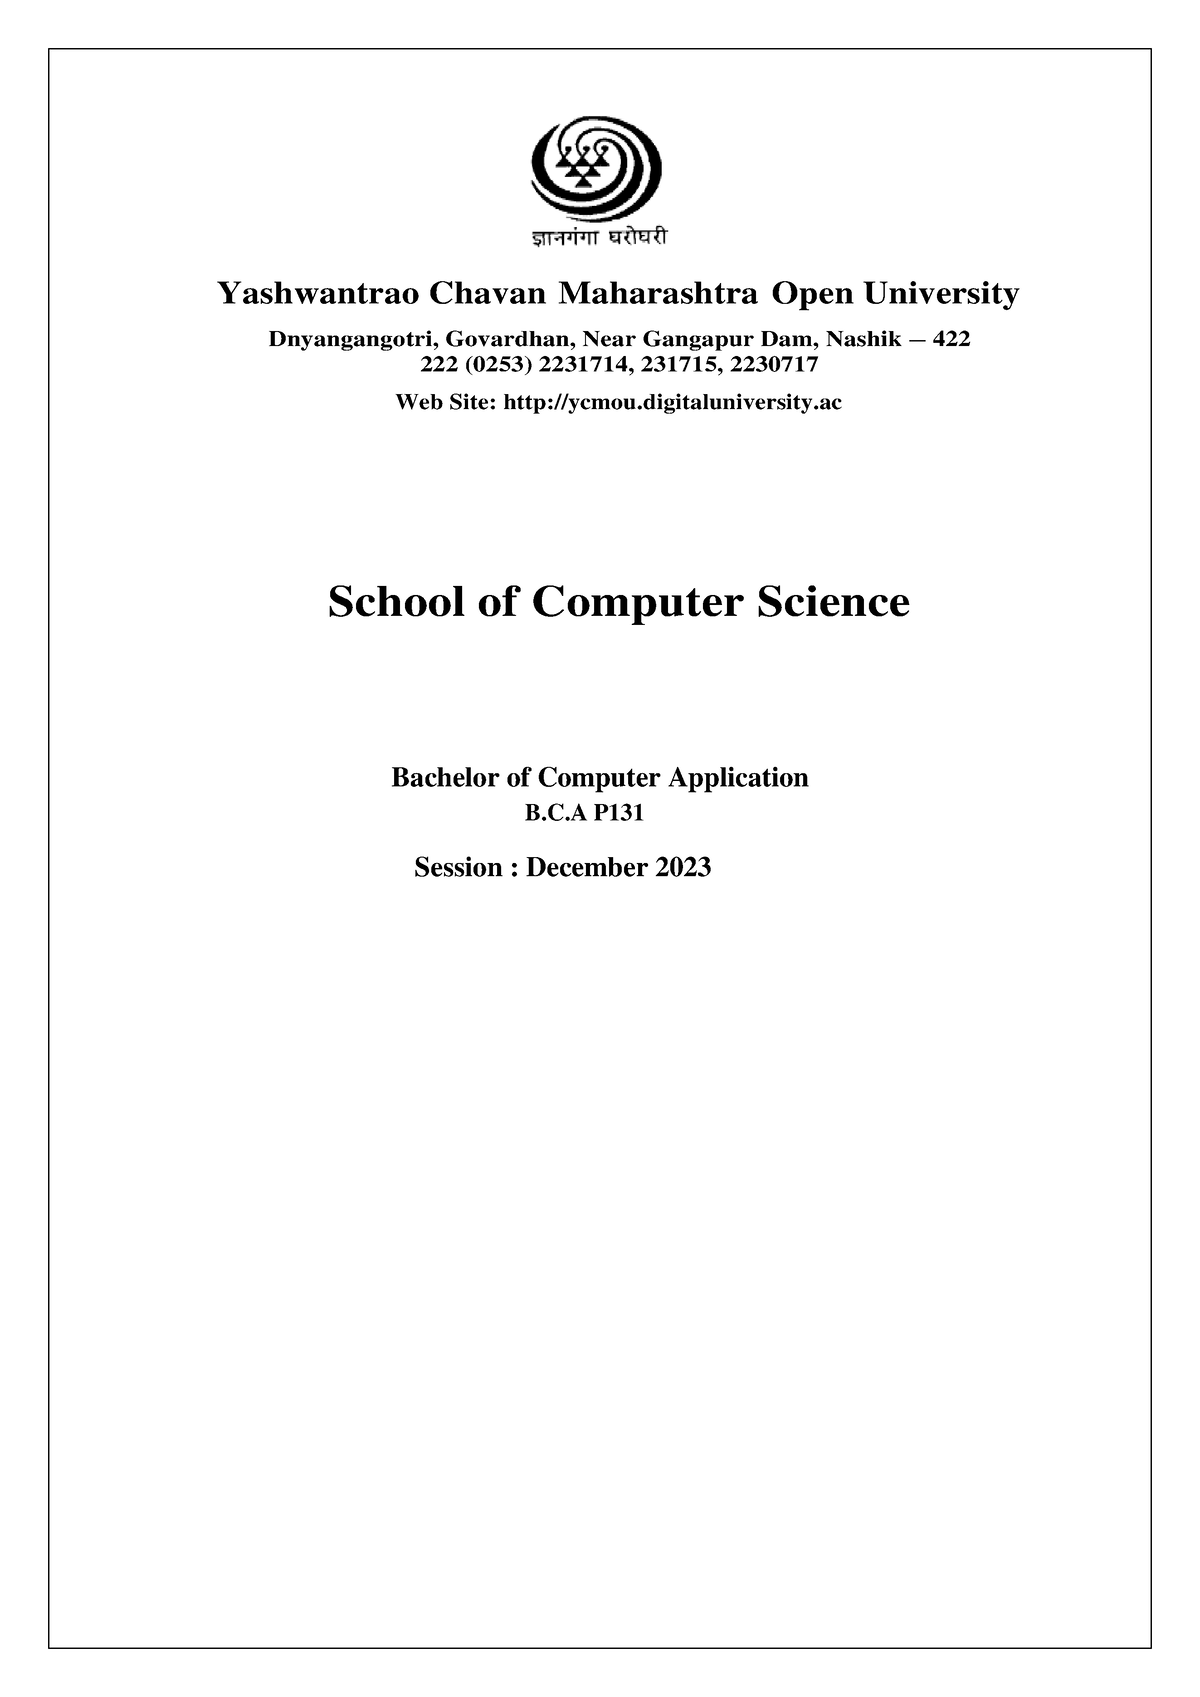 yashwantrao chavan maharashtra open university home assignments